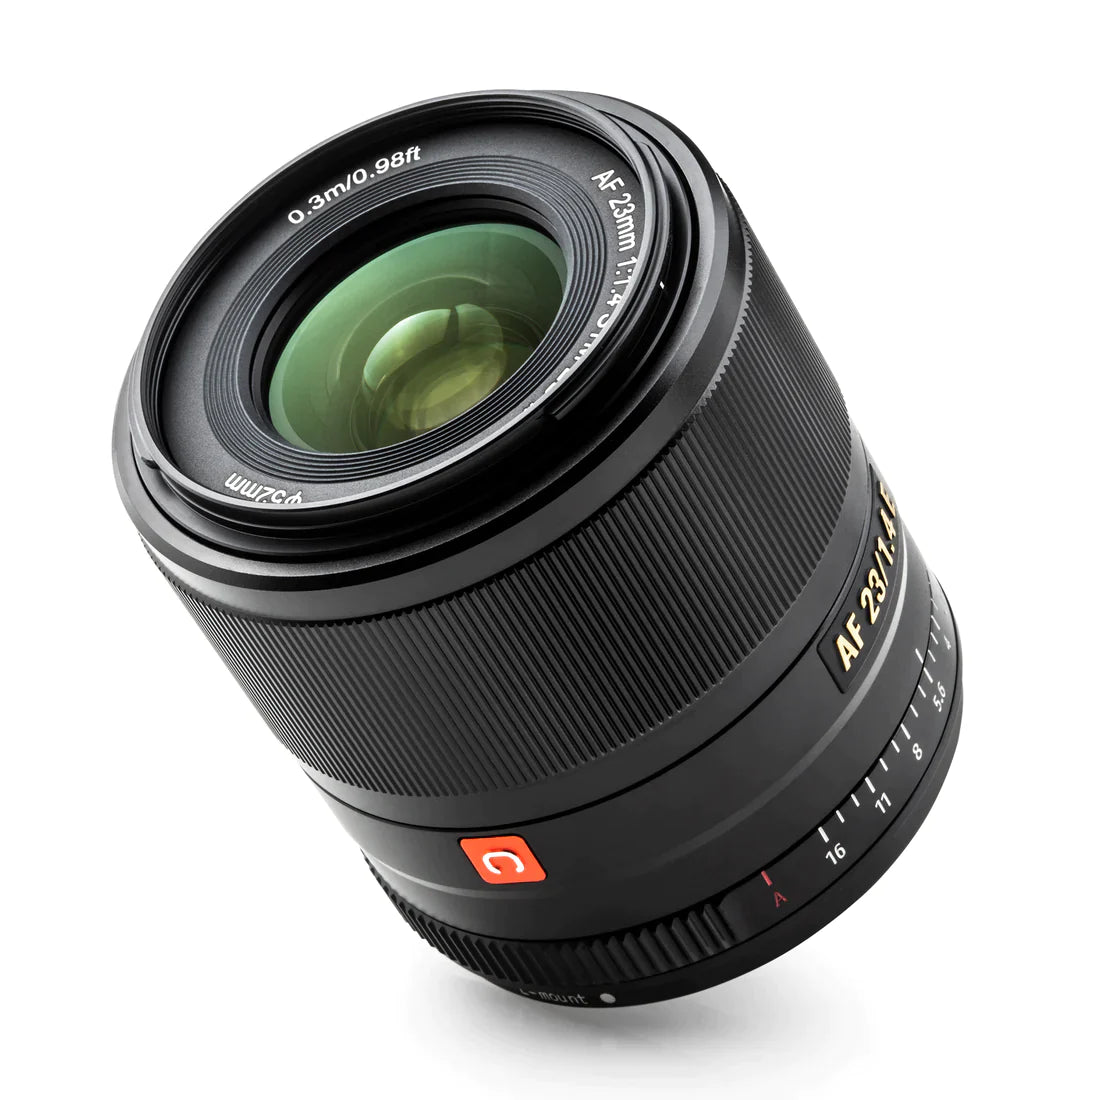 Viltrox AF 23mm F1.4 Auto Focus APS-C Lens for Sony E-mount Camera - Vitopal